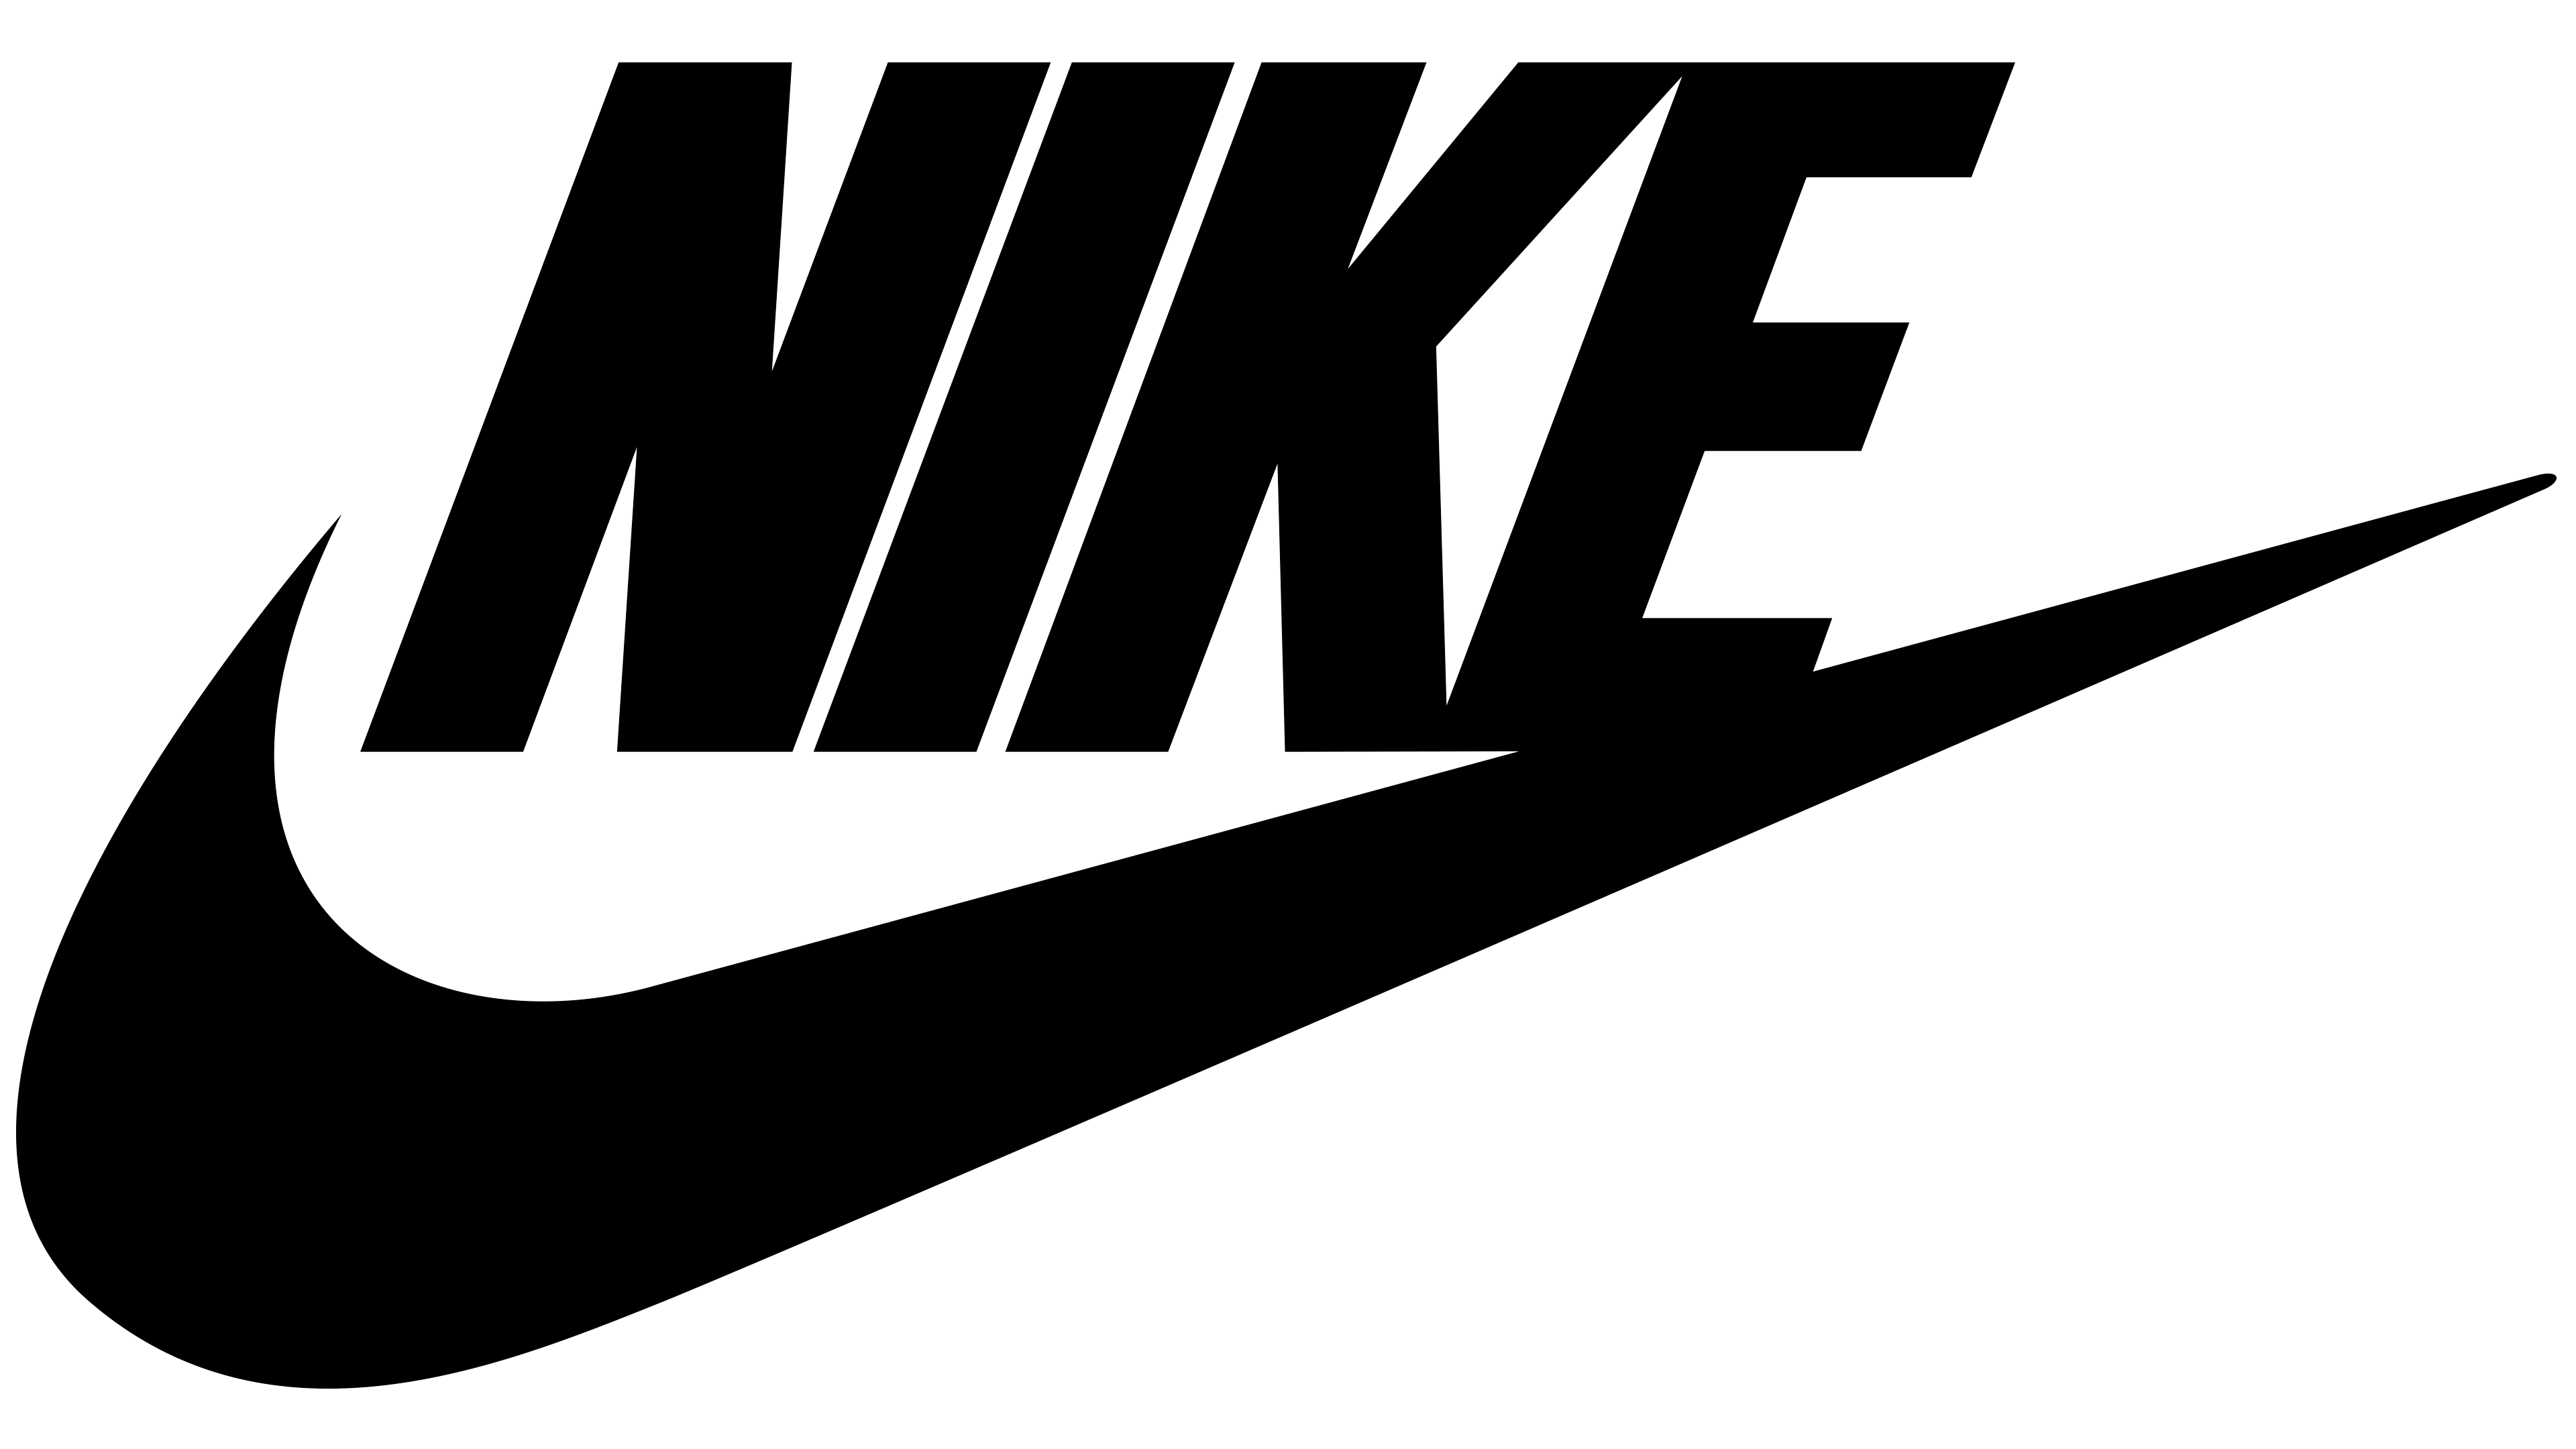 zacht toekomst In zoomen Nike Logo : histoire, signification de l'emblème